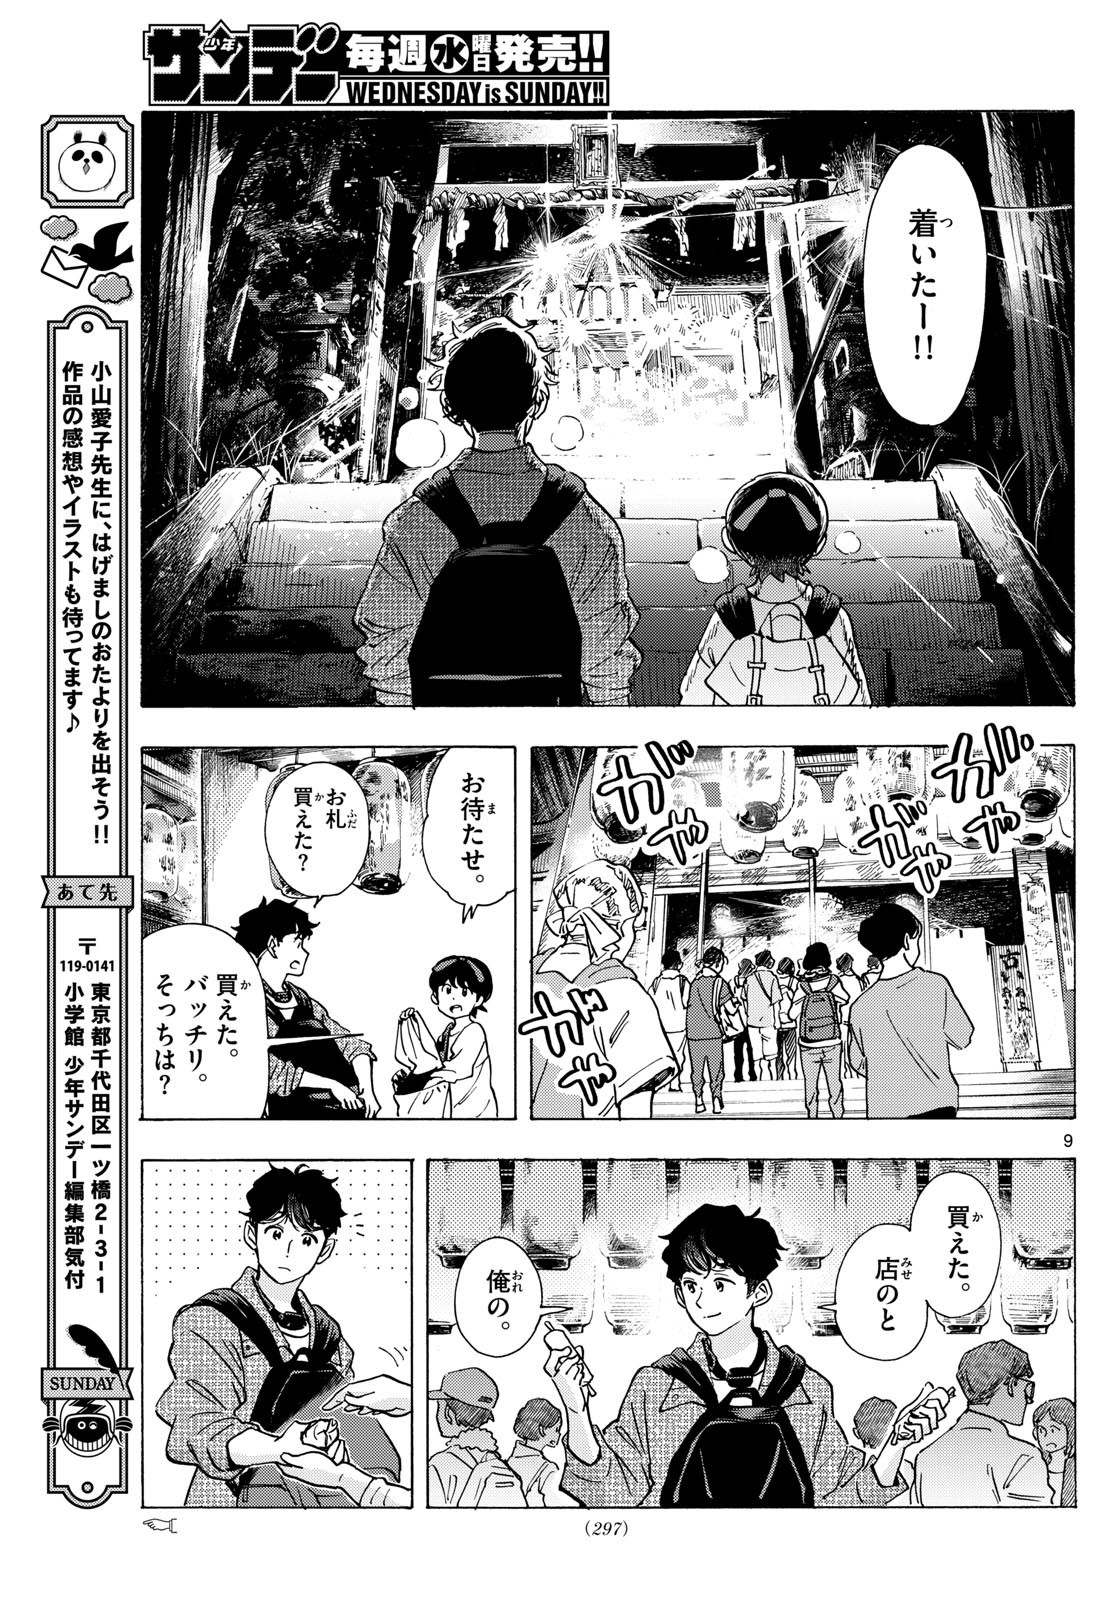 Maiko-san Chi no Makanai-san - Chapter 297 - Page 9